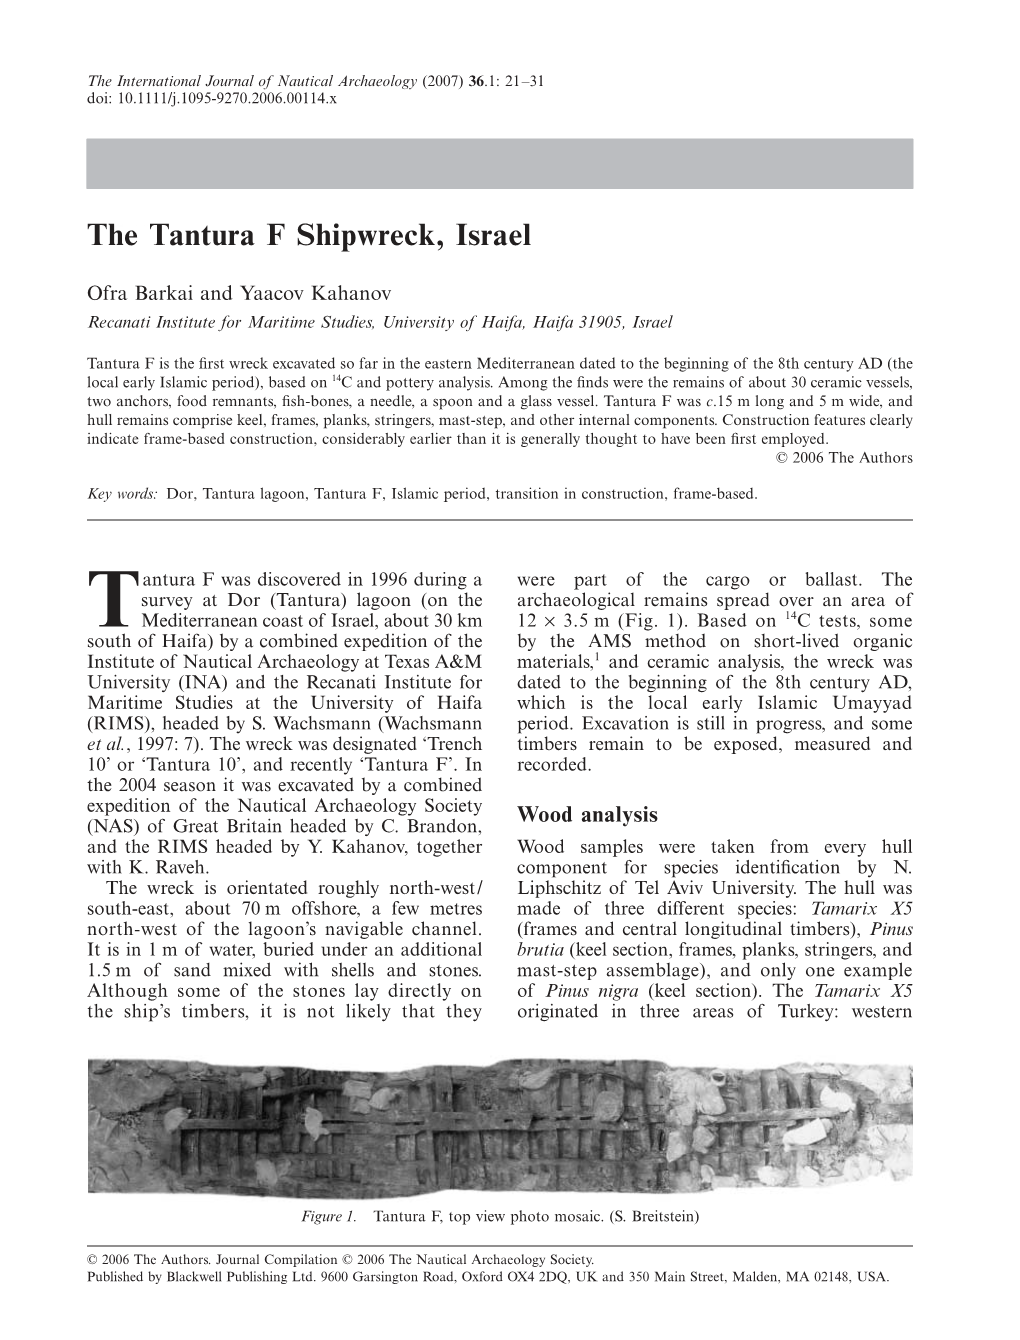 The Tantura F Shipwreck, Israel